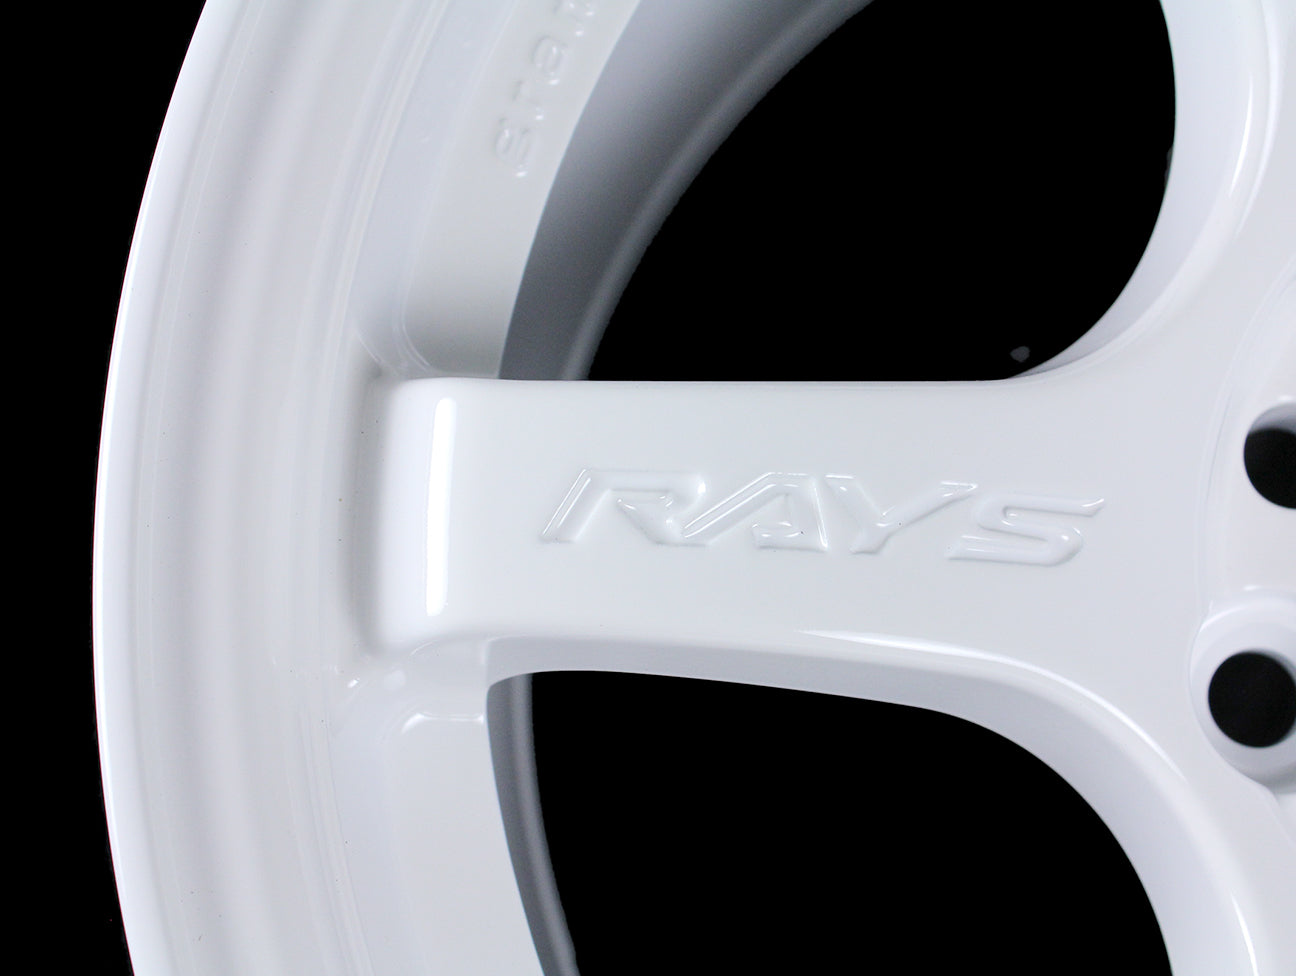 Rays Gram Lights 57DR Wheels - Champ White 15x8 / 4x100